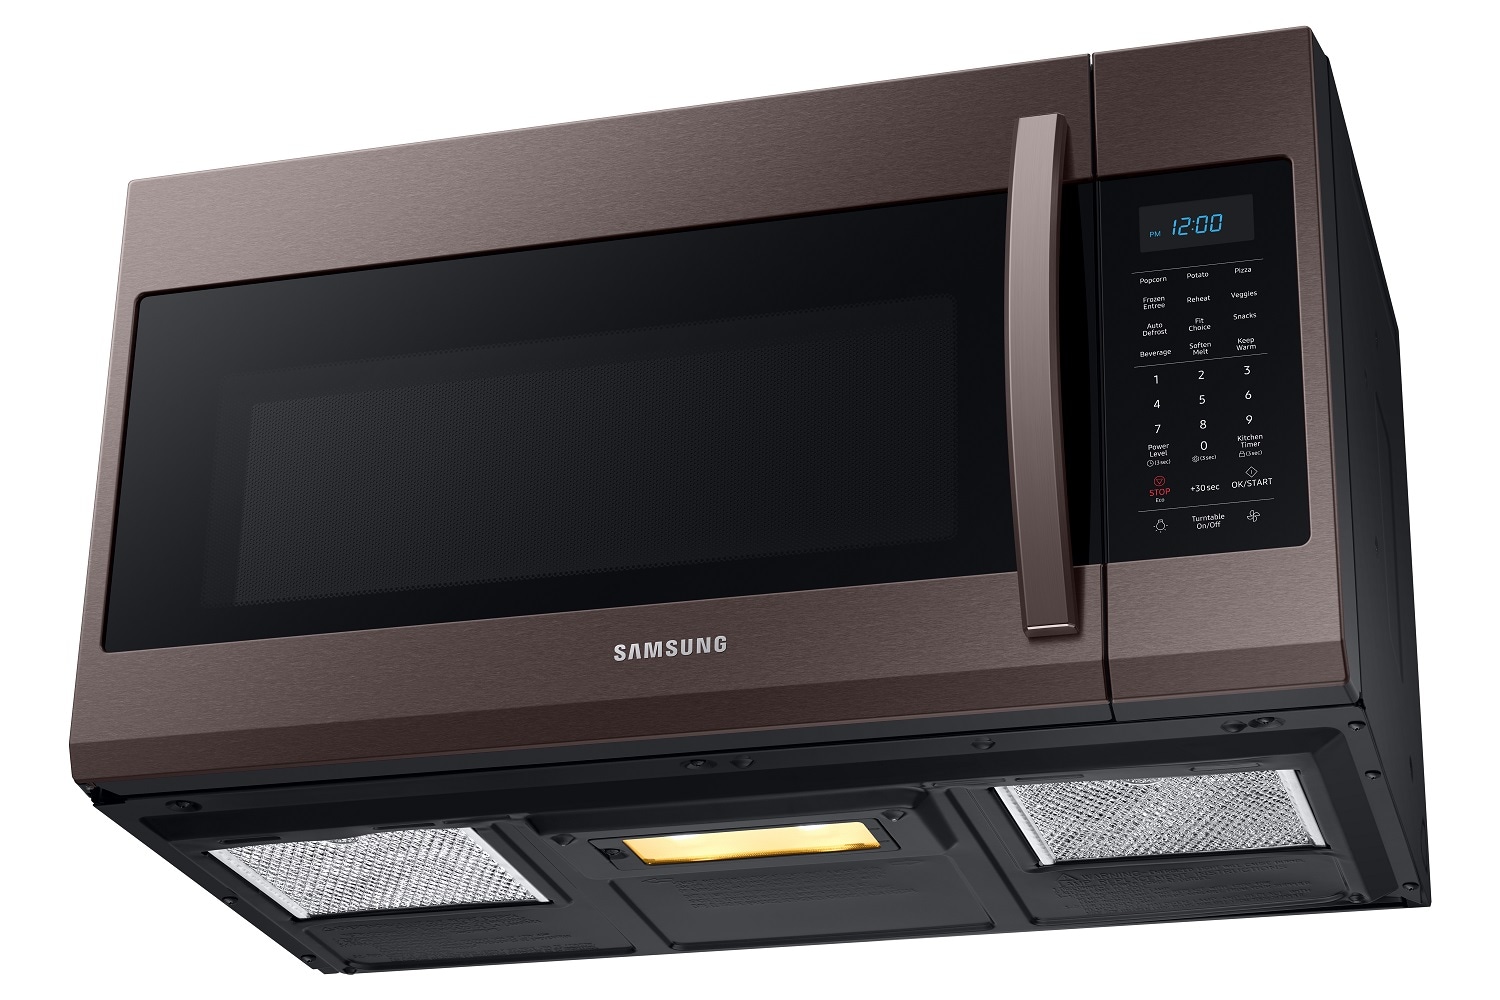 Samsung 1.9 Cu. ft. Stainless Steel Countertop Microwave